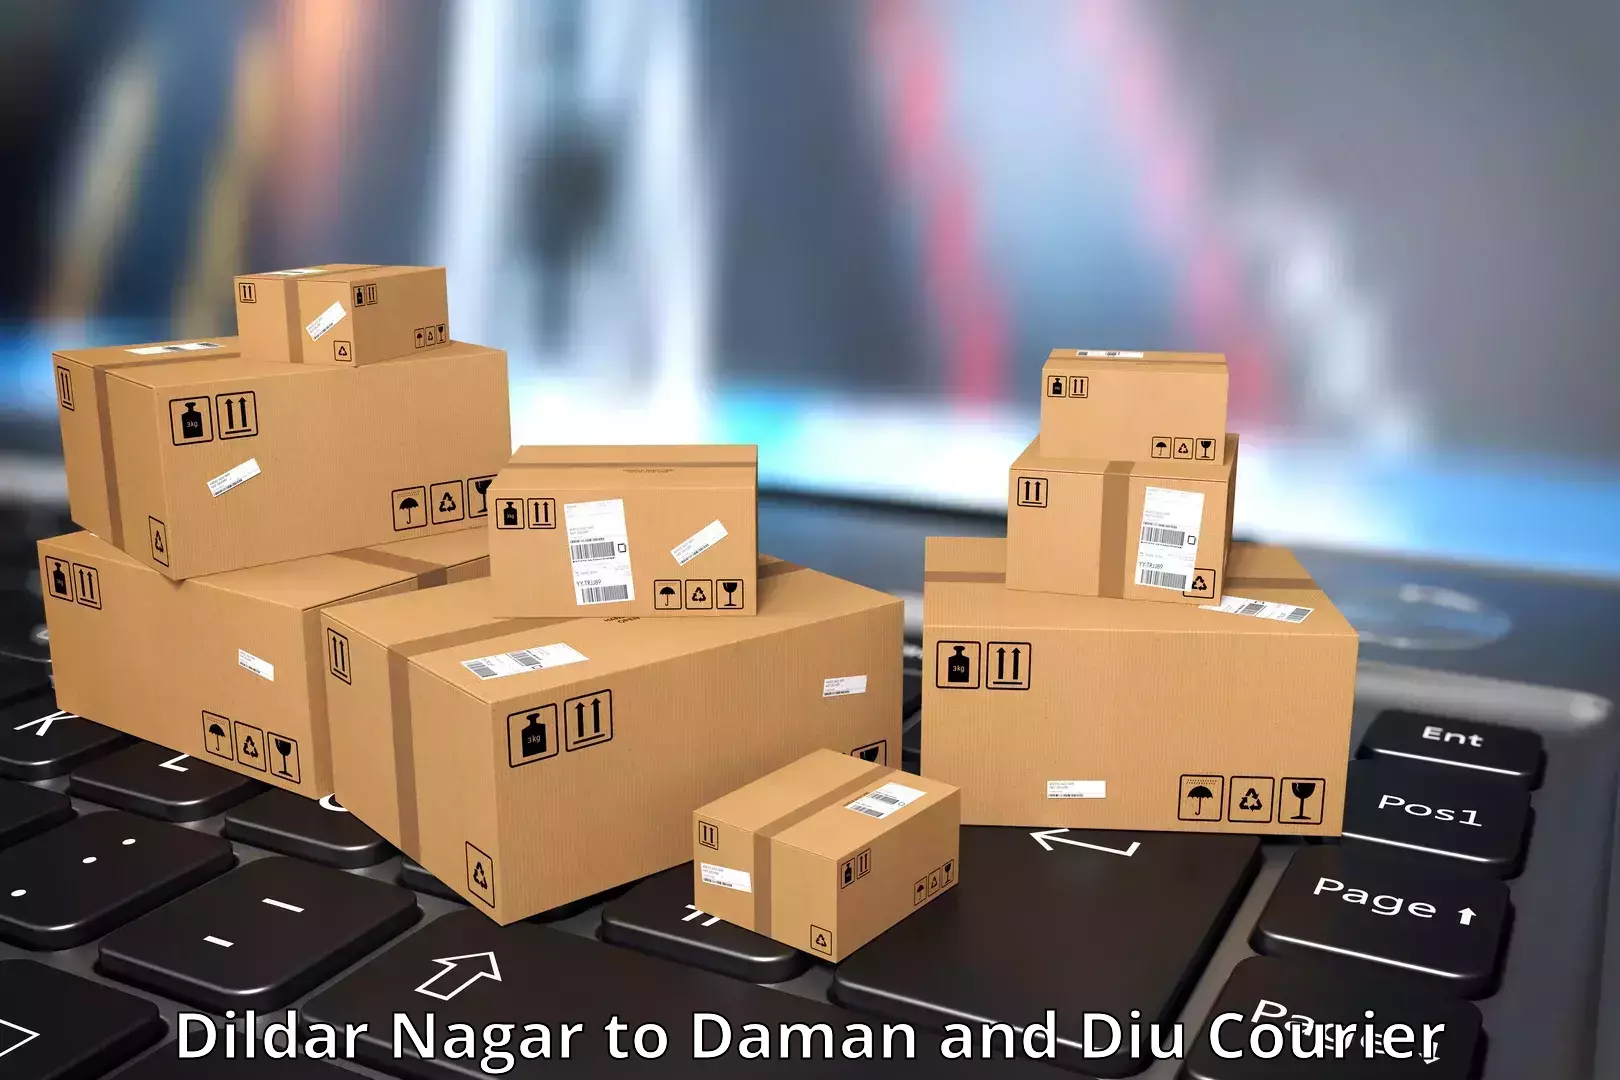 24/7 courier service Dildar Nagar to Diu